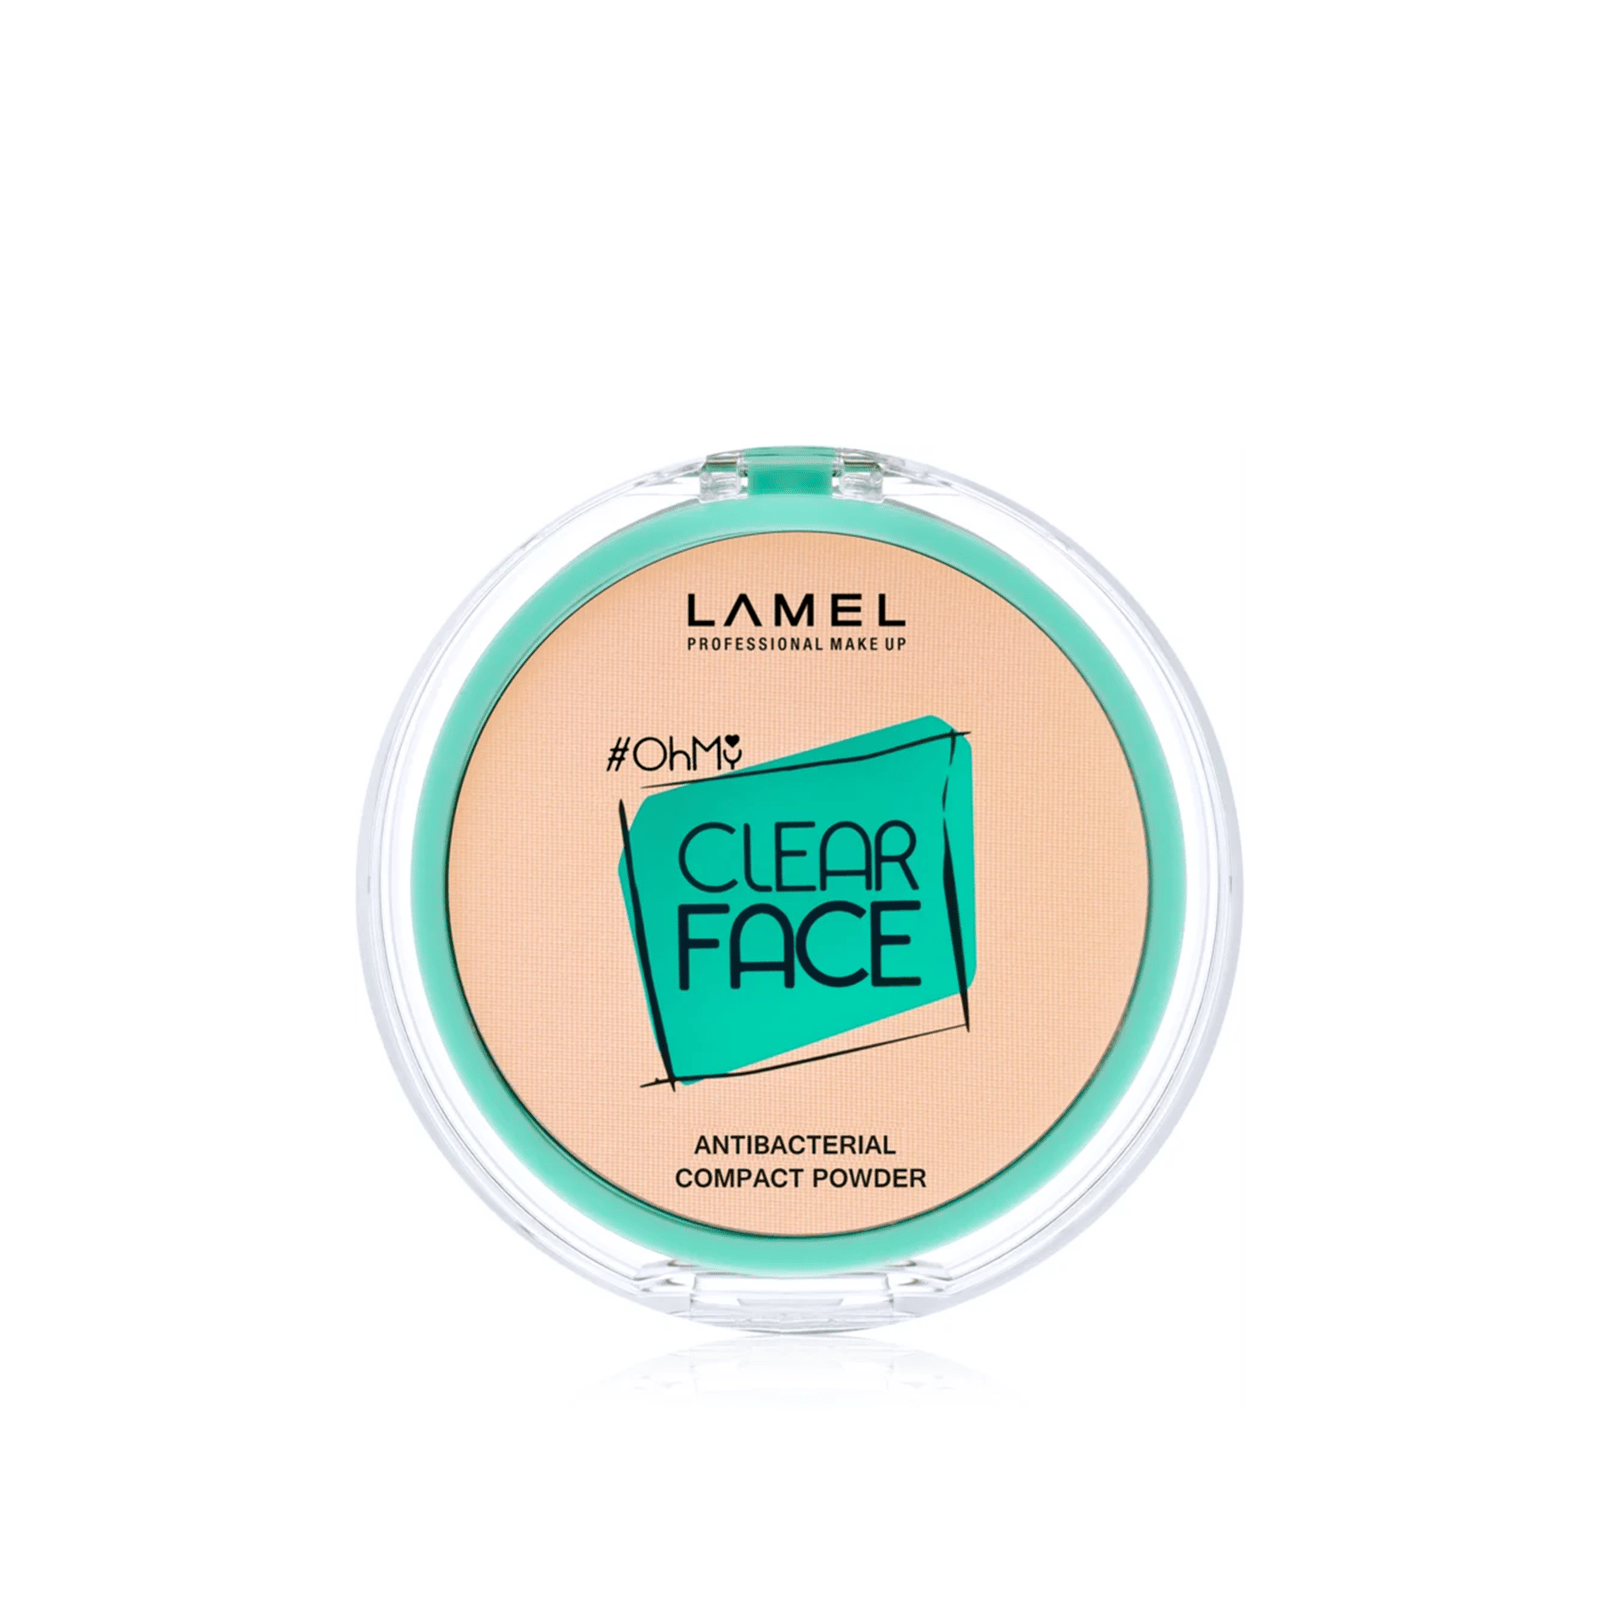 Lamel Oh My Clear Face Compact Powder 402 Vanilla 6g